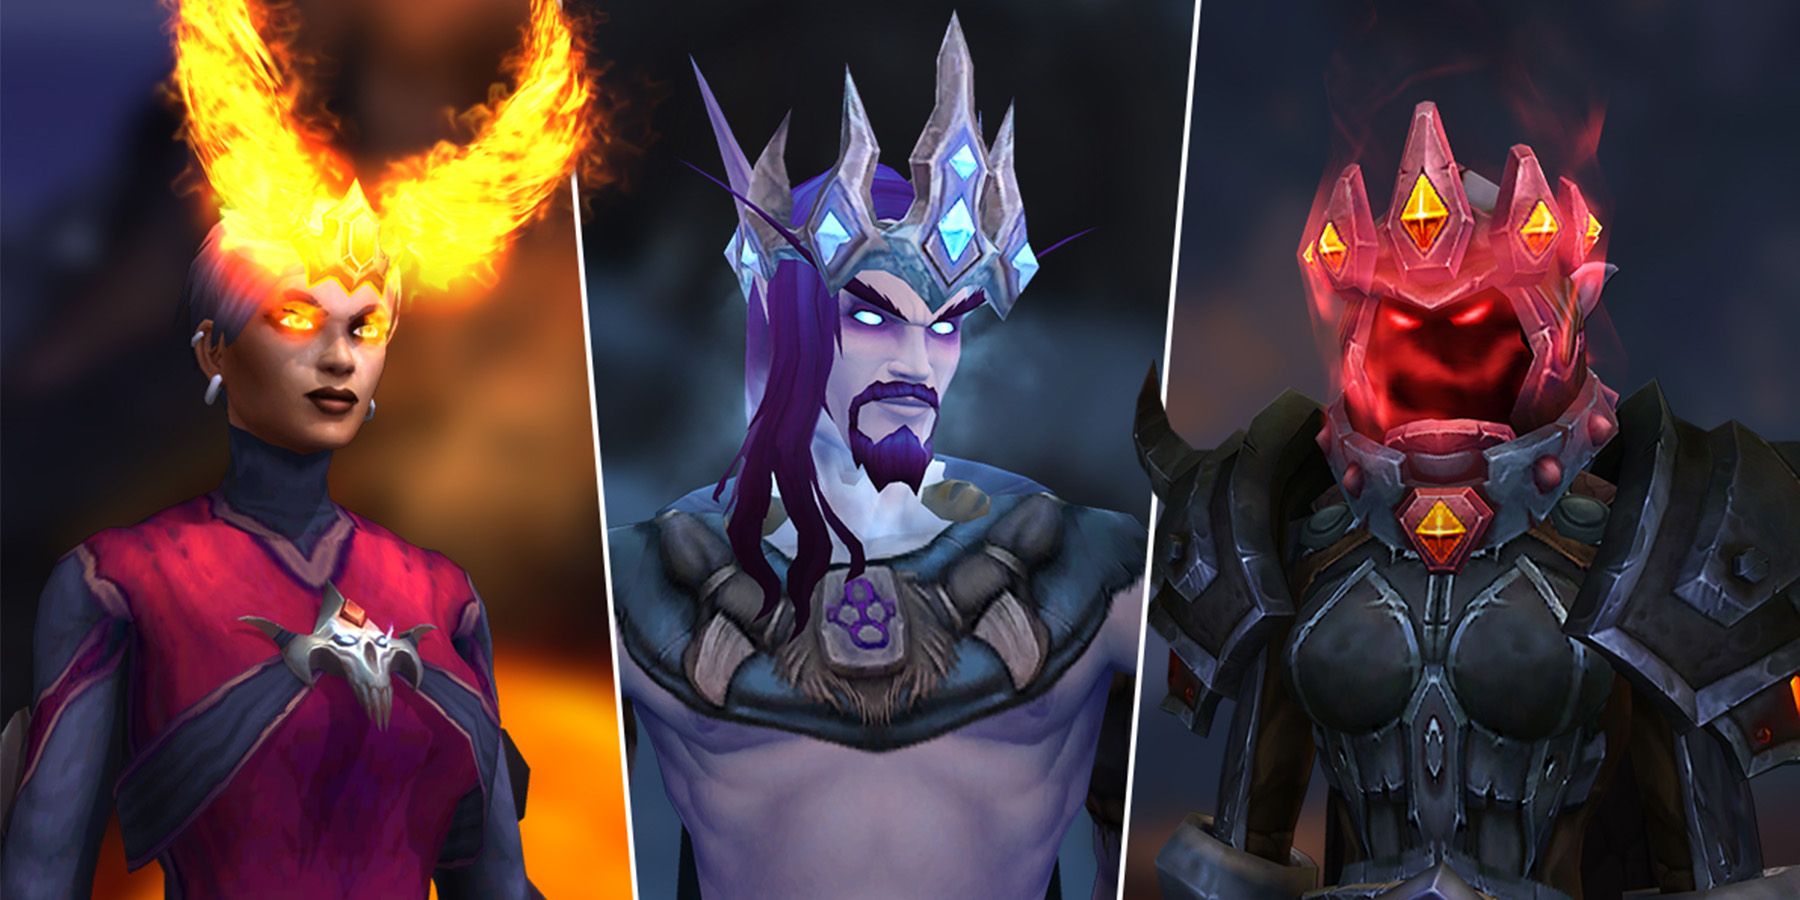 World of Warcraft Prime Gaming Cosmetics Explained